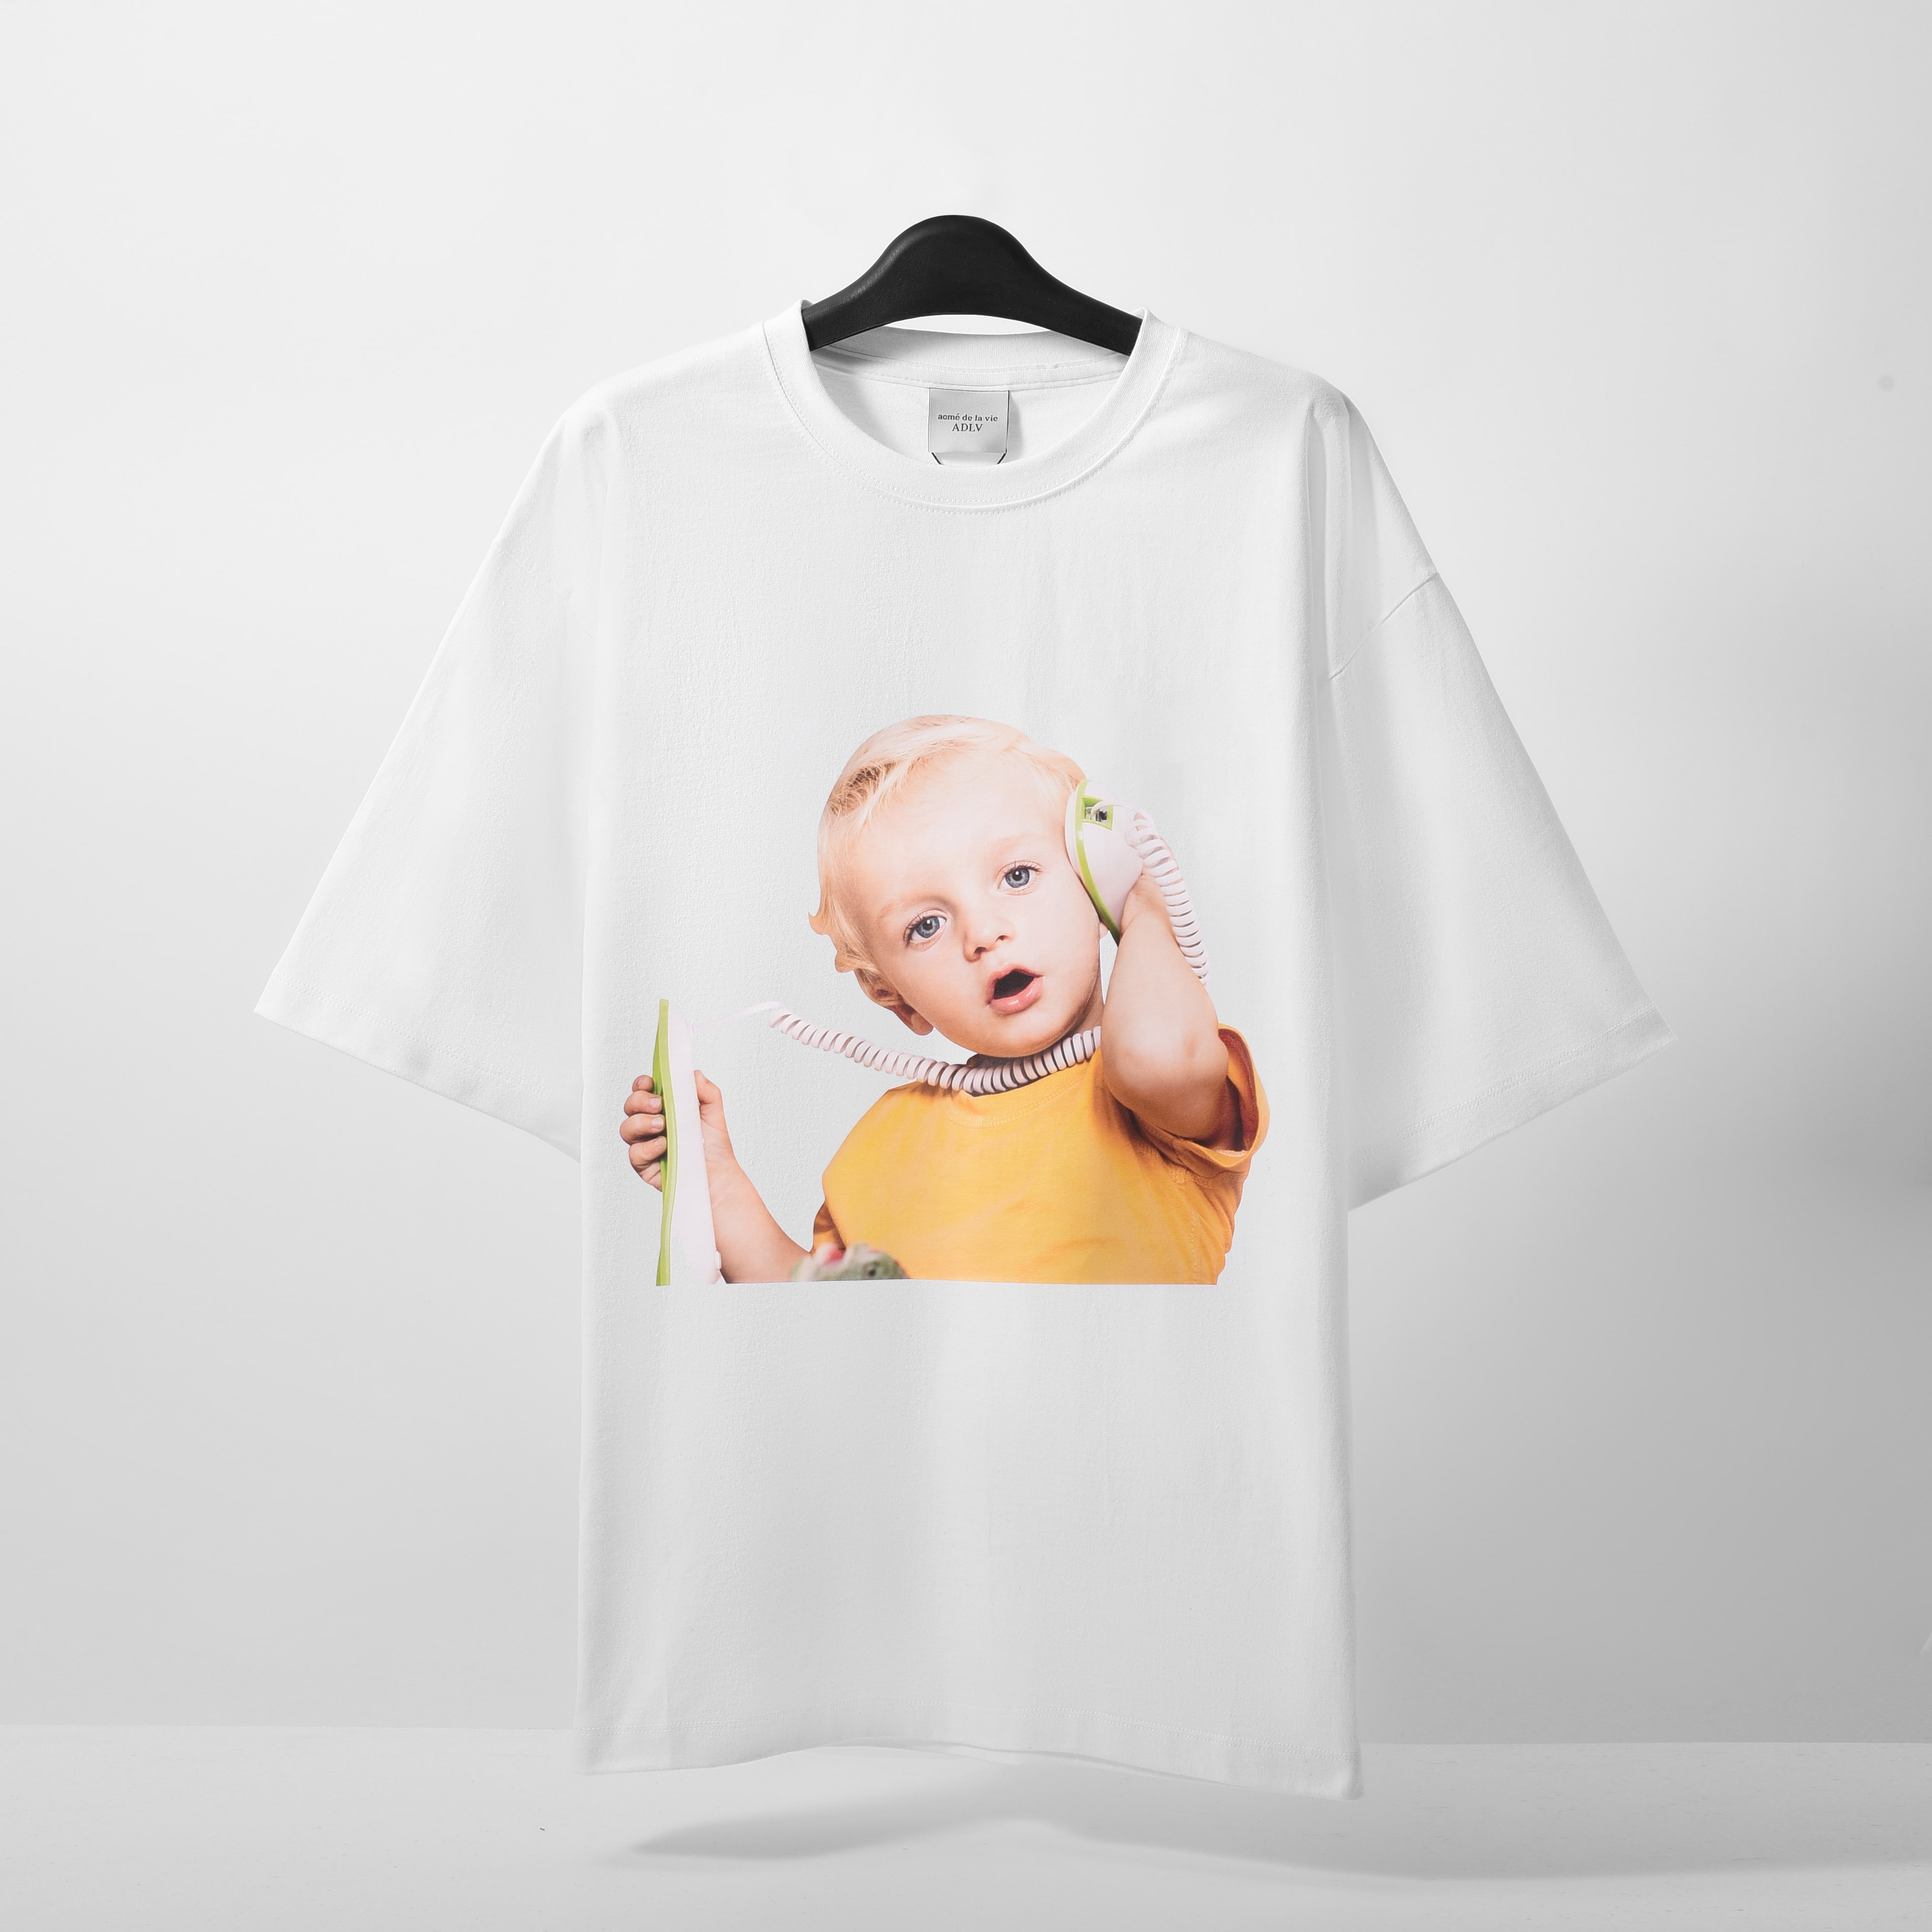 ADLV Baby Face Short Sleeve telephone Tshirt - White